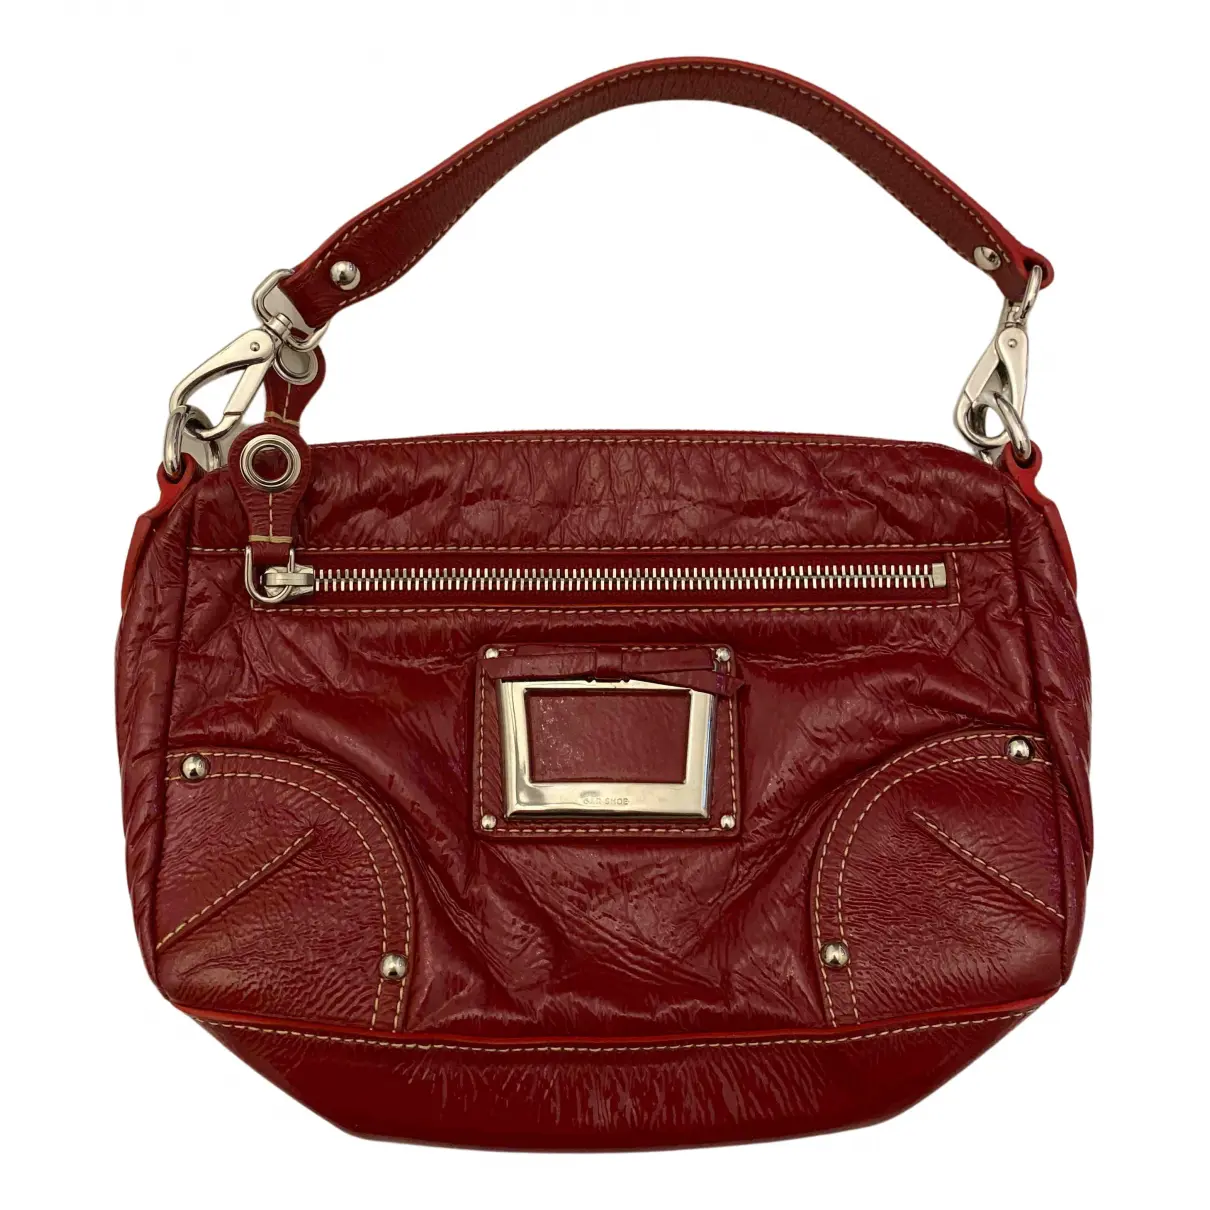 Patent leather handbag Carshoe